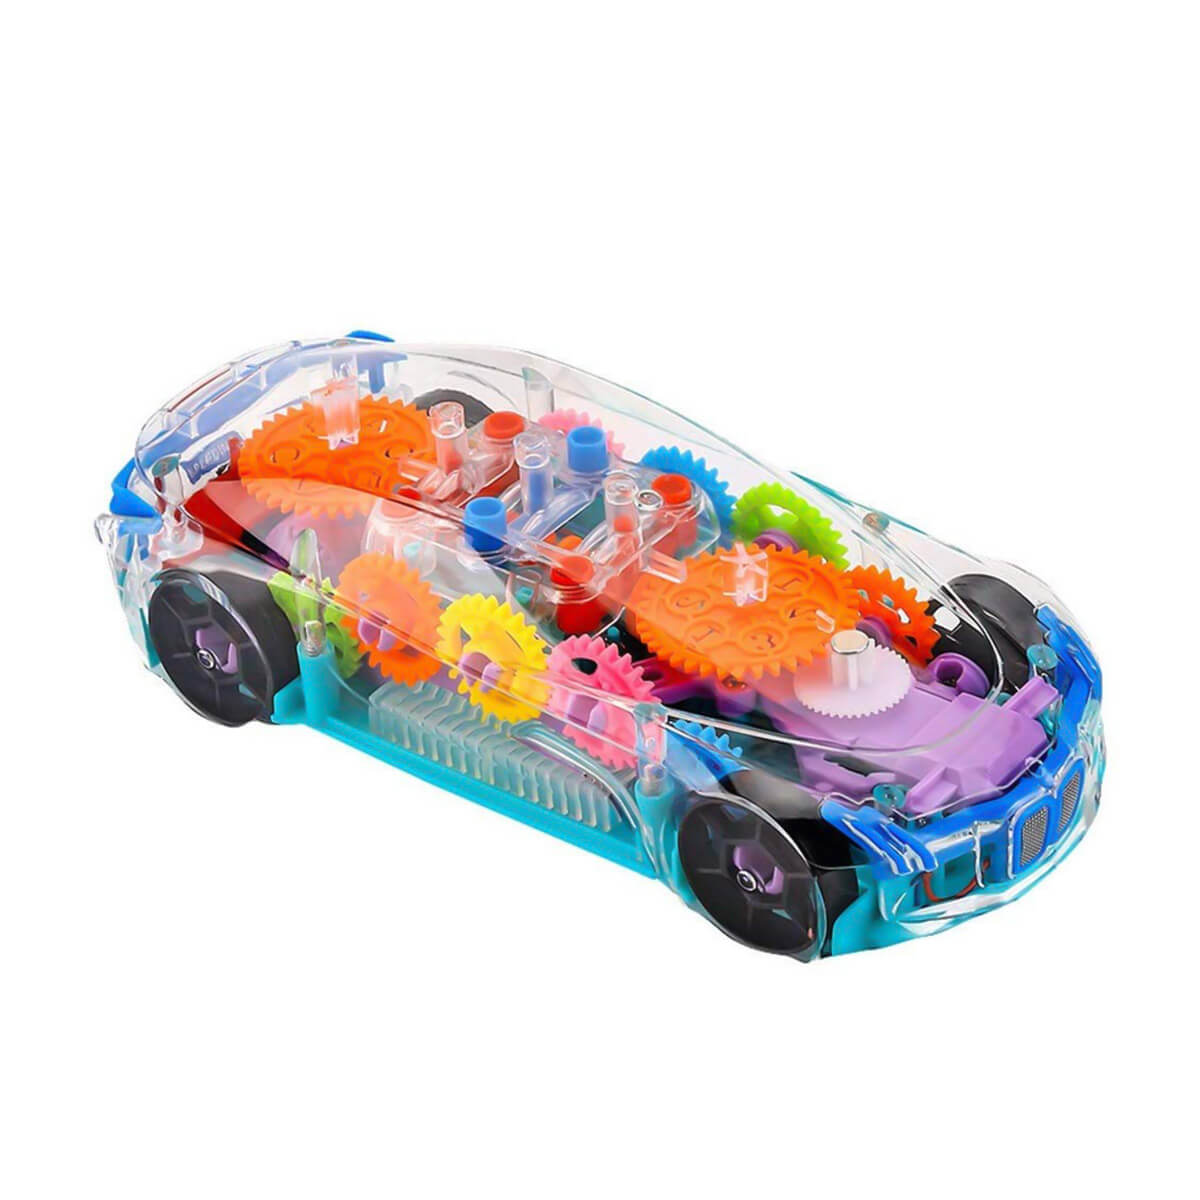 Gear Racing 3D Transparent Car Toy for Kids